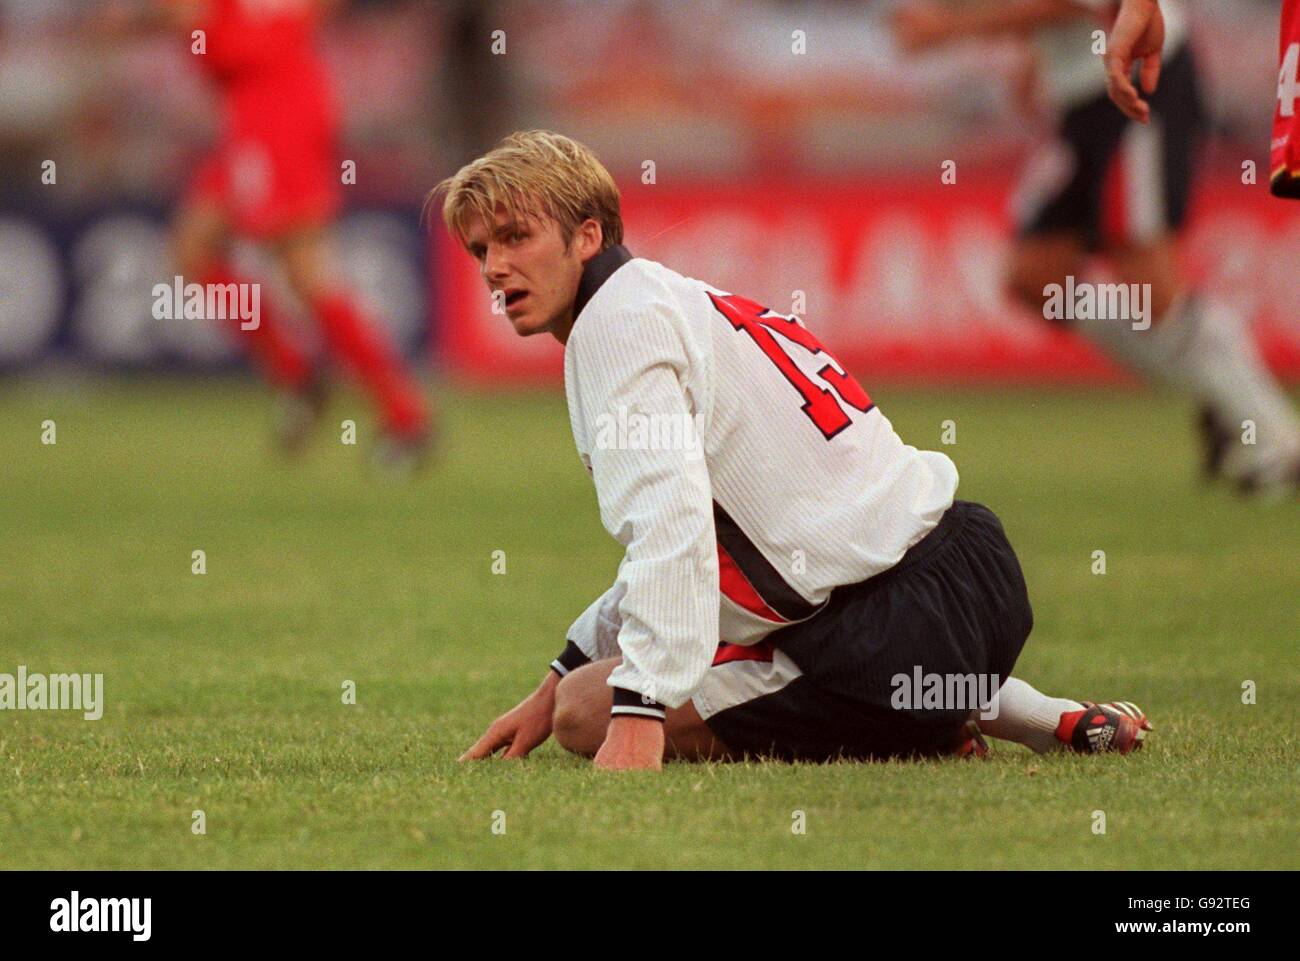 Soccer - King Hassan II International Cup - England v Belgium. David Beckham, England Stock Photo